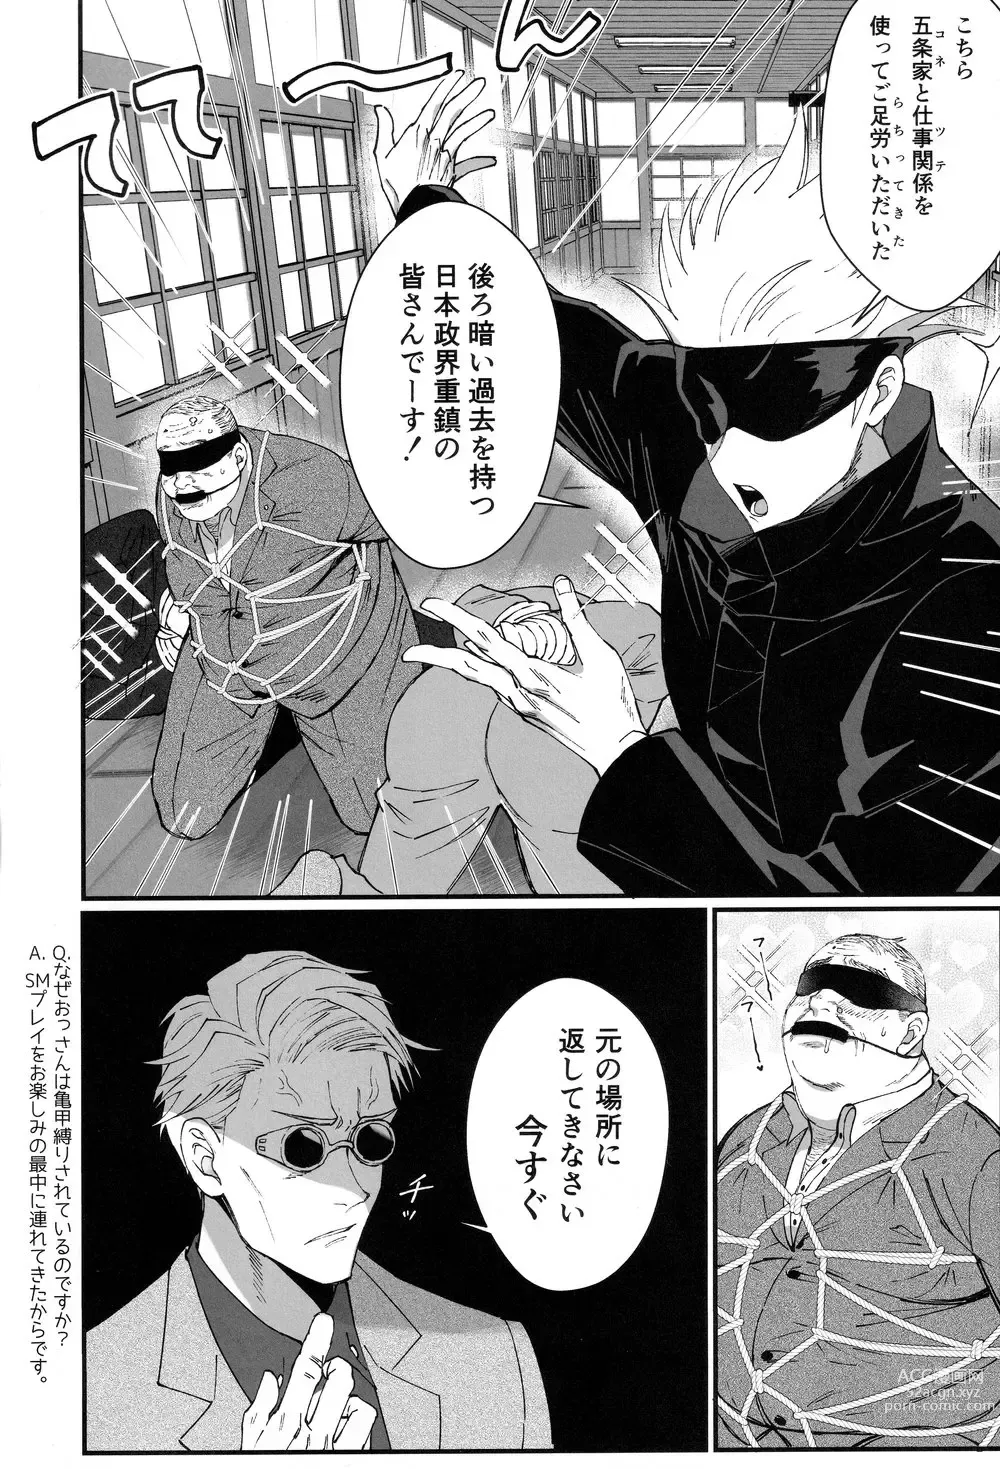 Page 7 of doujinshi Zoku Gachikoi Monster